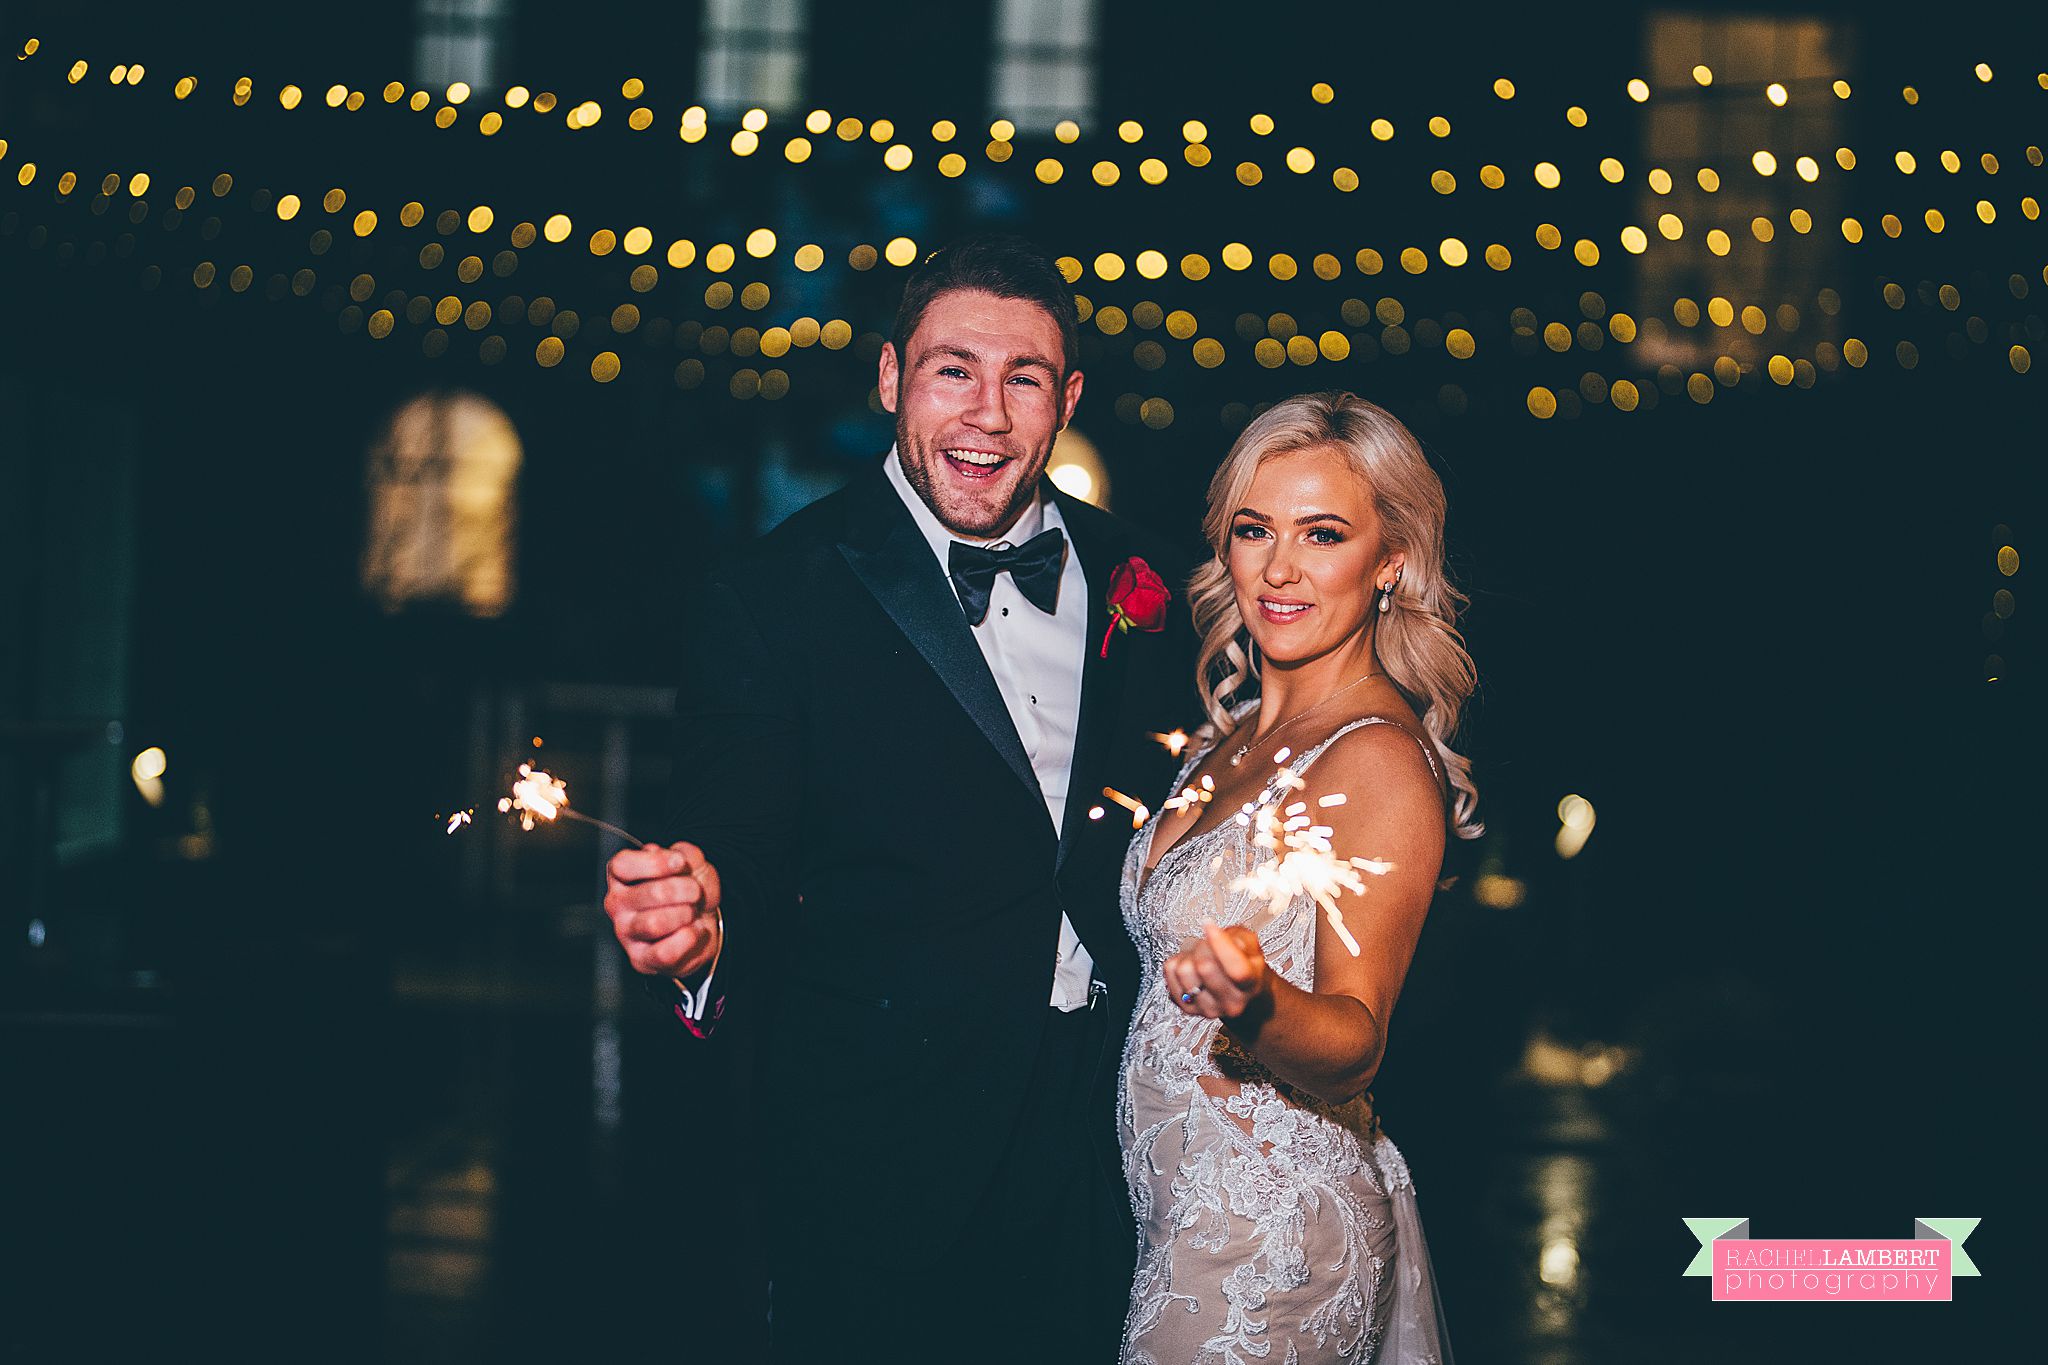 Hensol Castle Christmas Wedding rachel lambert photography sparklers